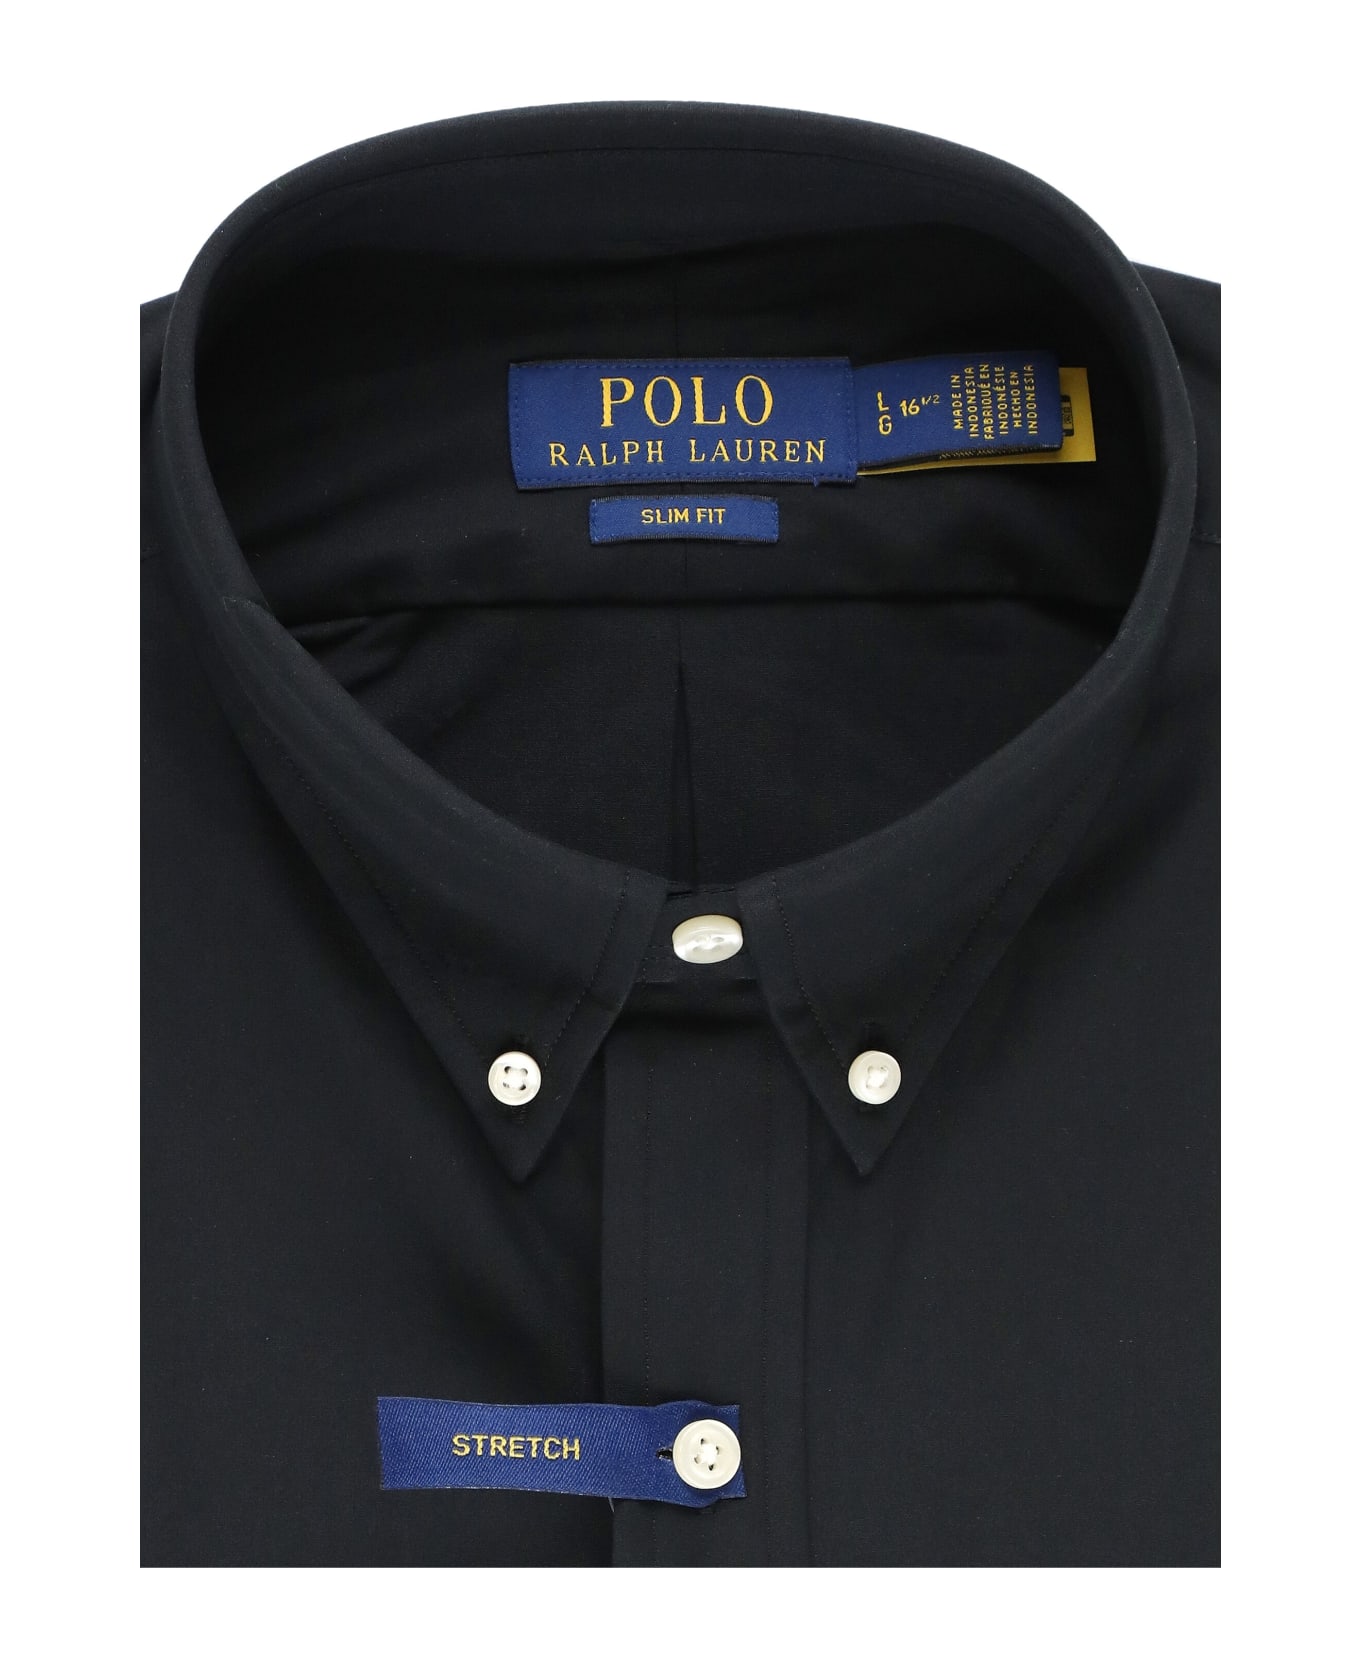 Ralph Lauren Pony Shirt - Polo Black